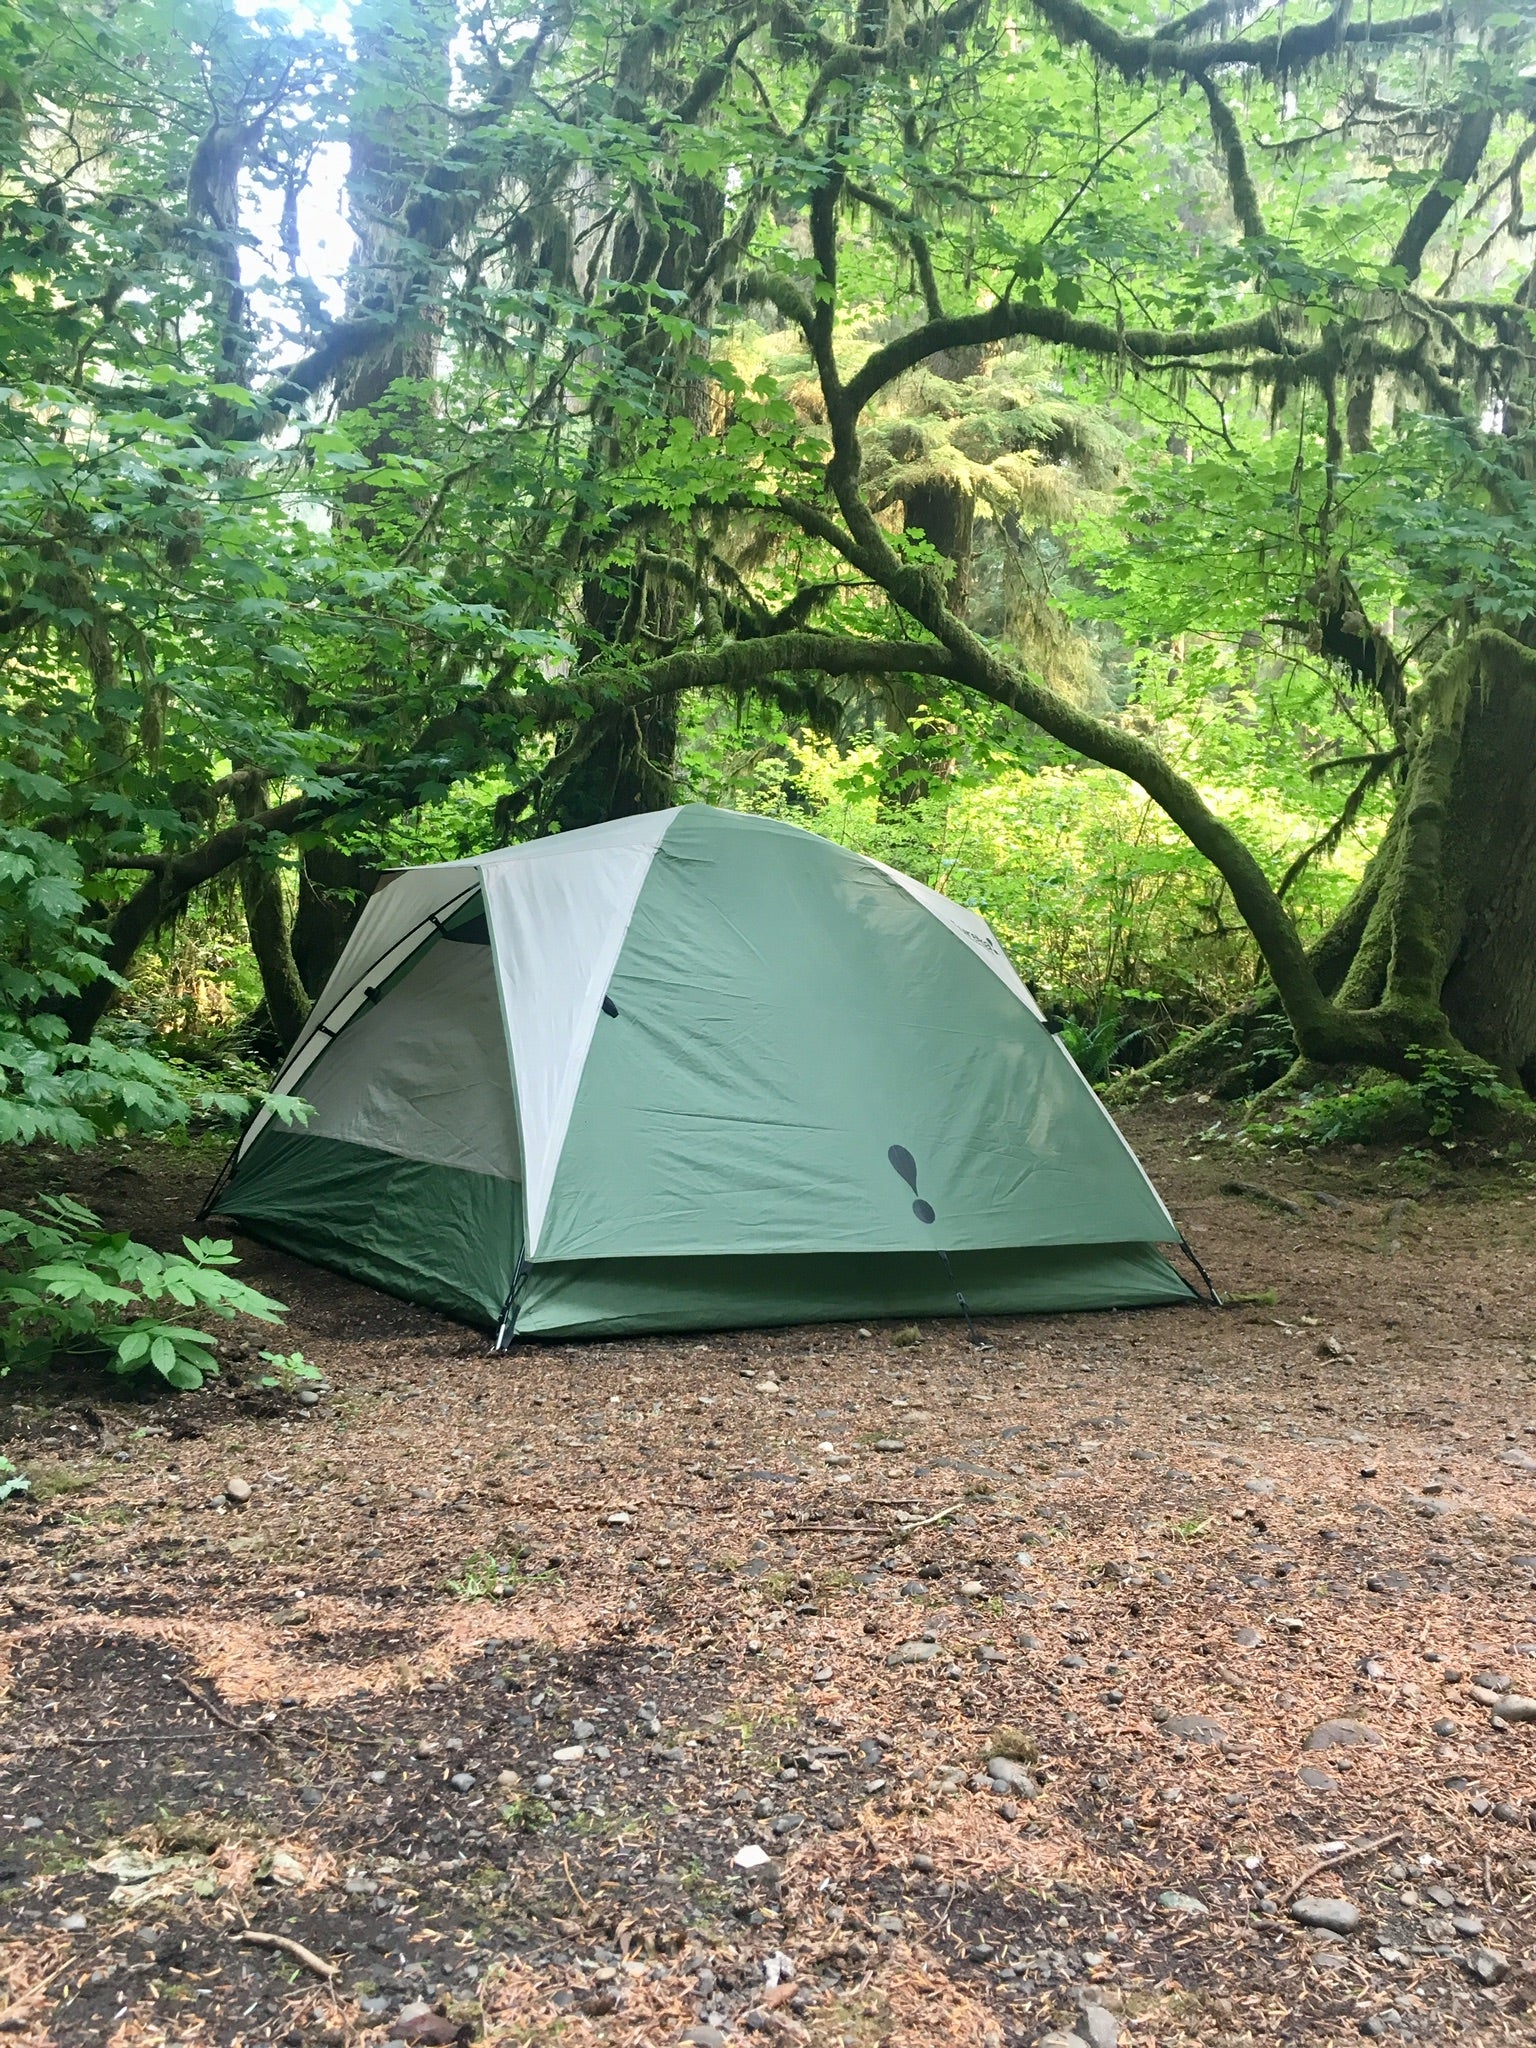 Good tent spot nestled in the trees